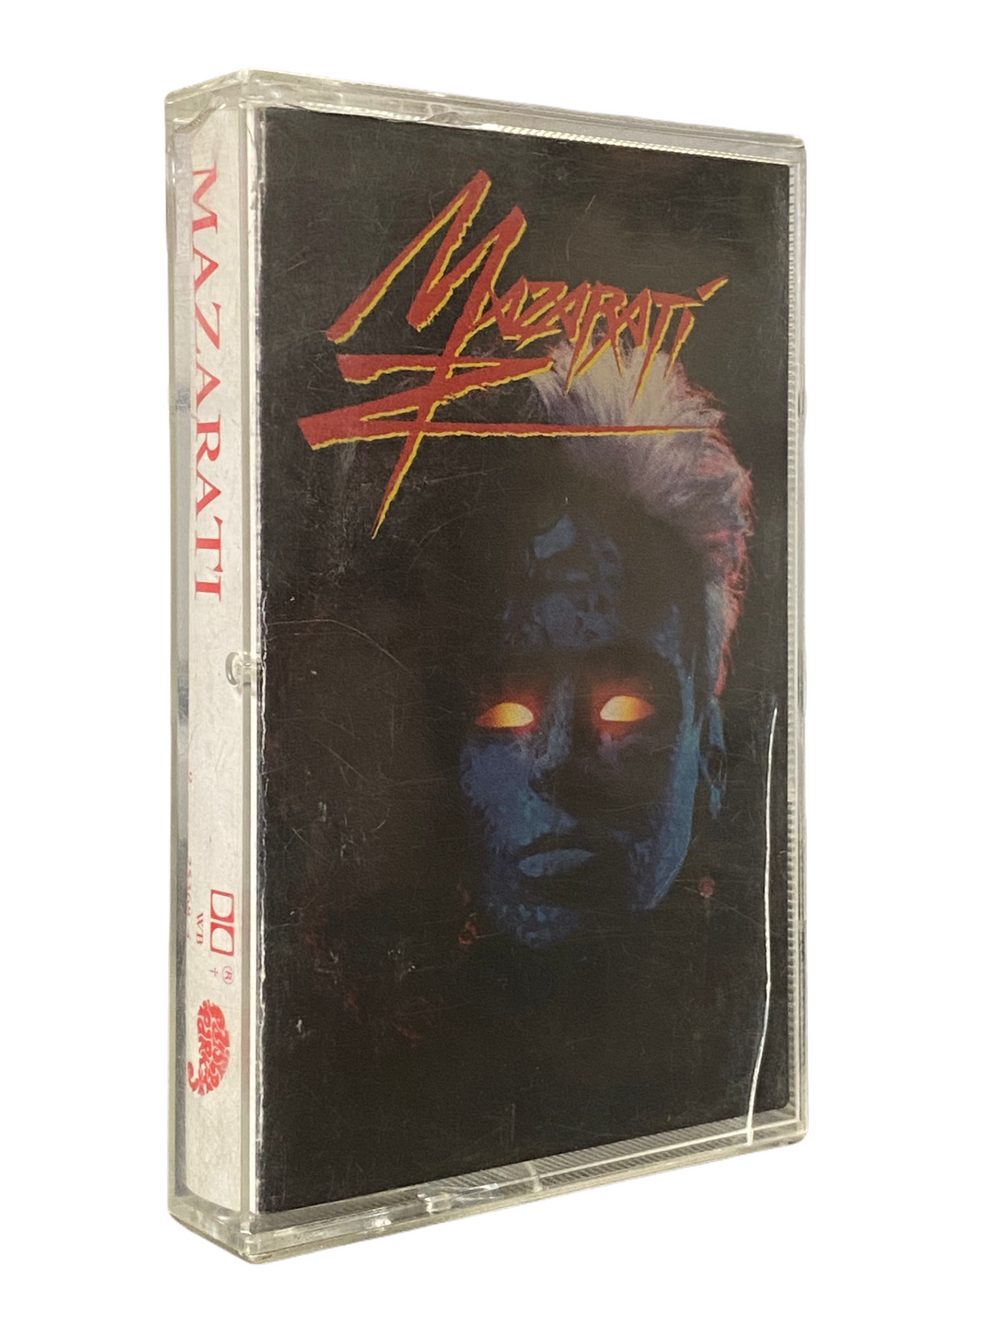 Prince – Mazarati Self Titled Tape Cassette Album Original 1986 Release Prince